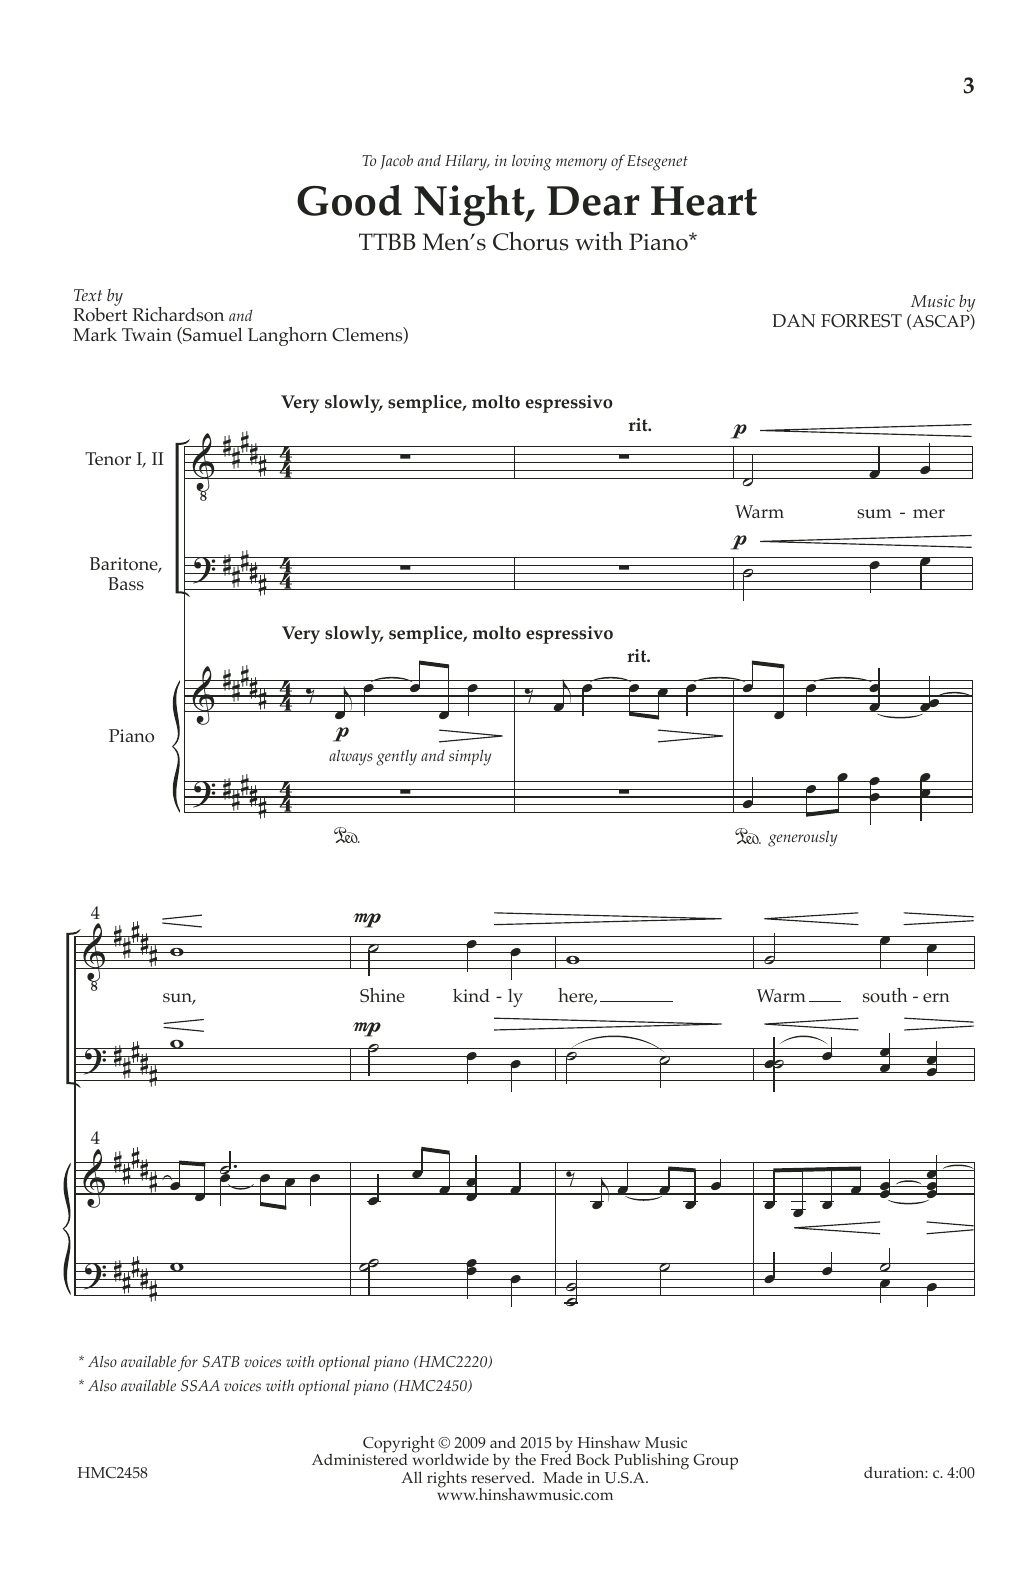 Dan Forrest Good Night, Dear Heart Sheet Music Notes & Chords for SATB Choir - Download or Print PDF